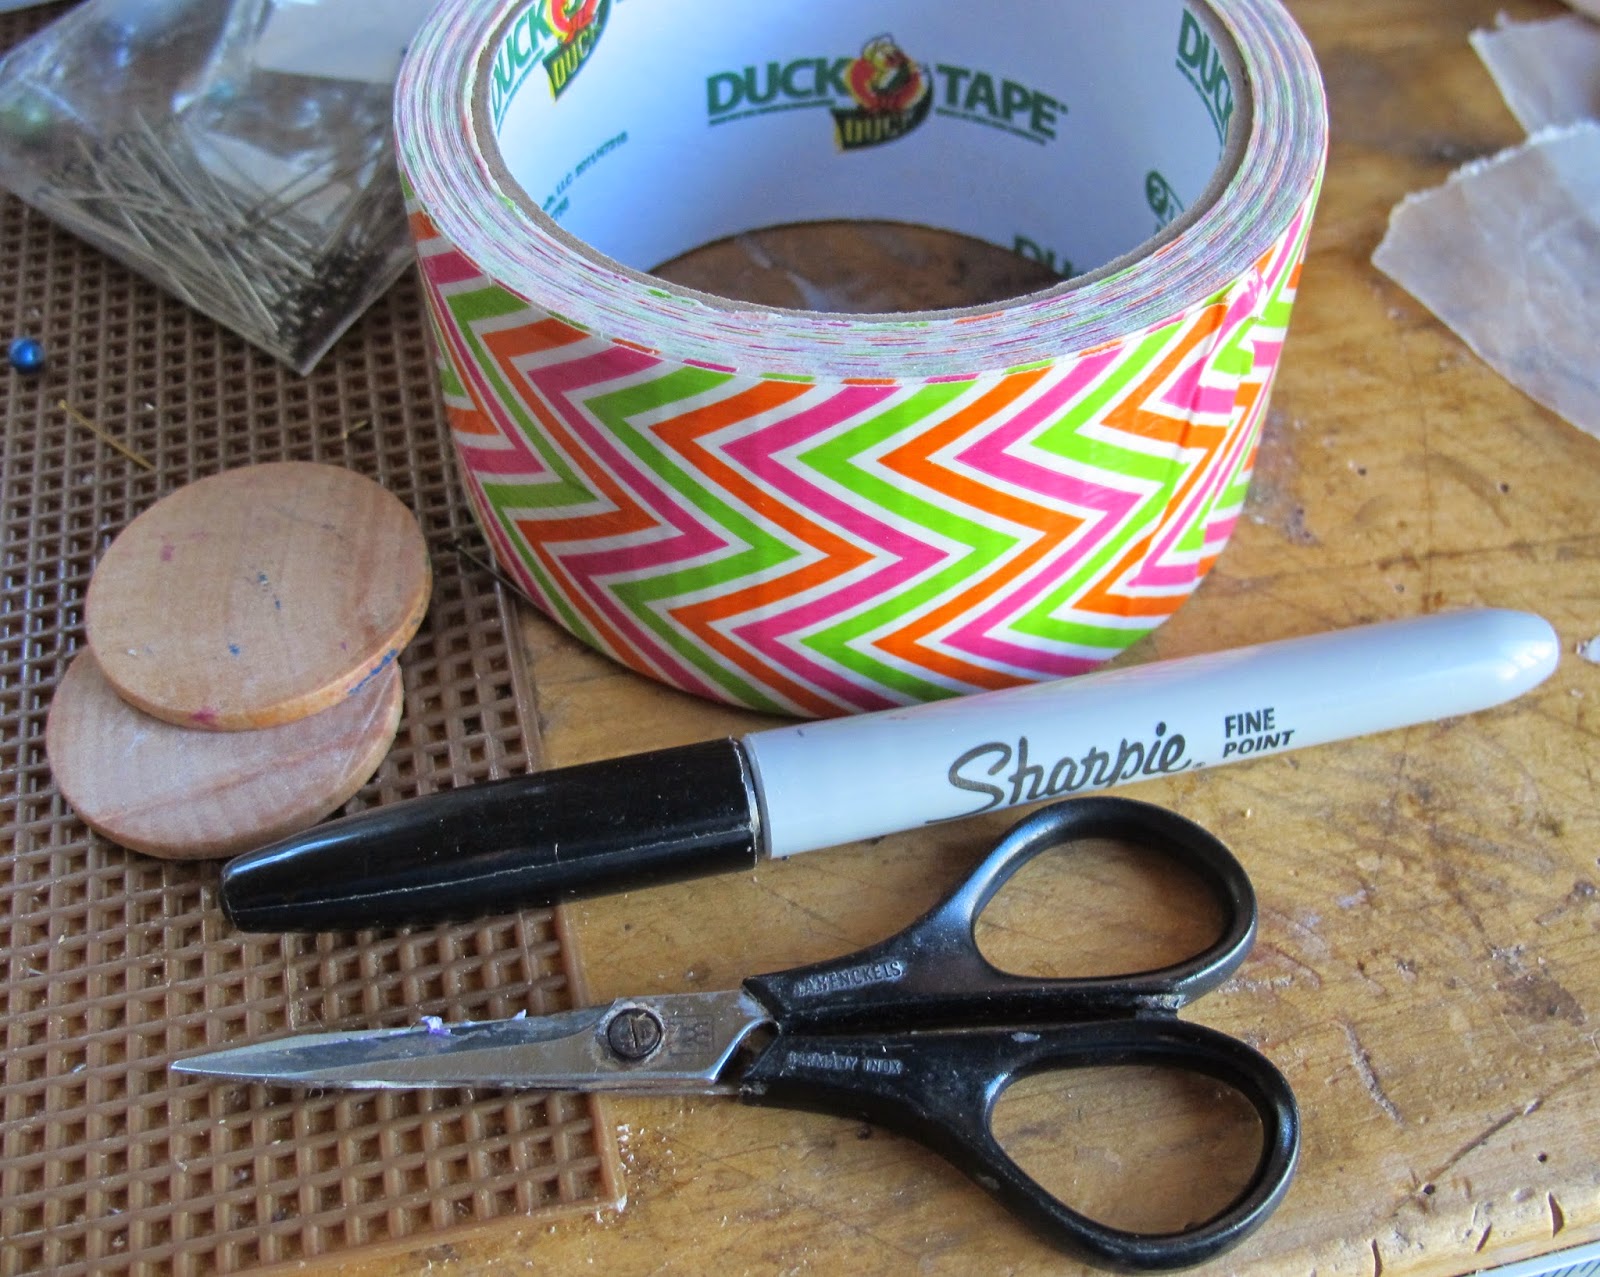 Duck tape crafts